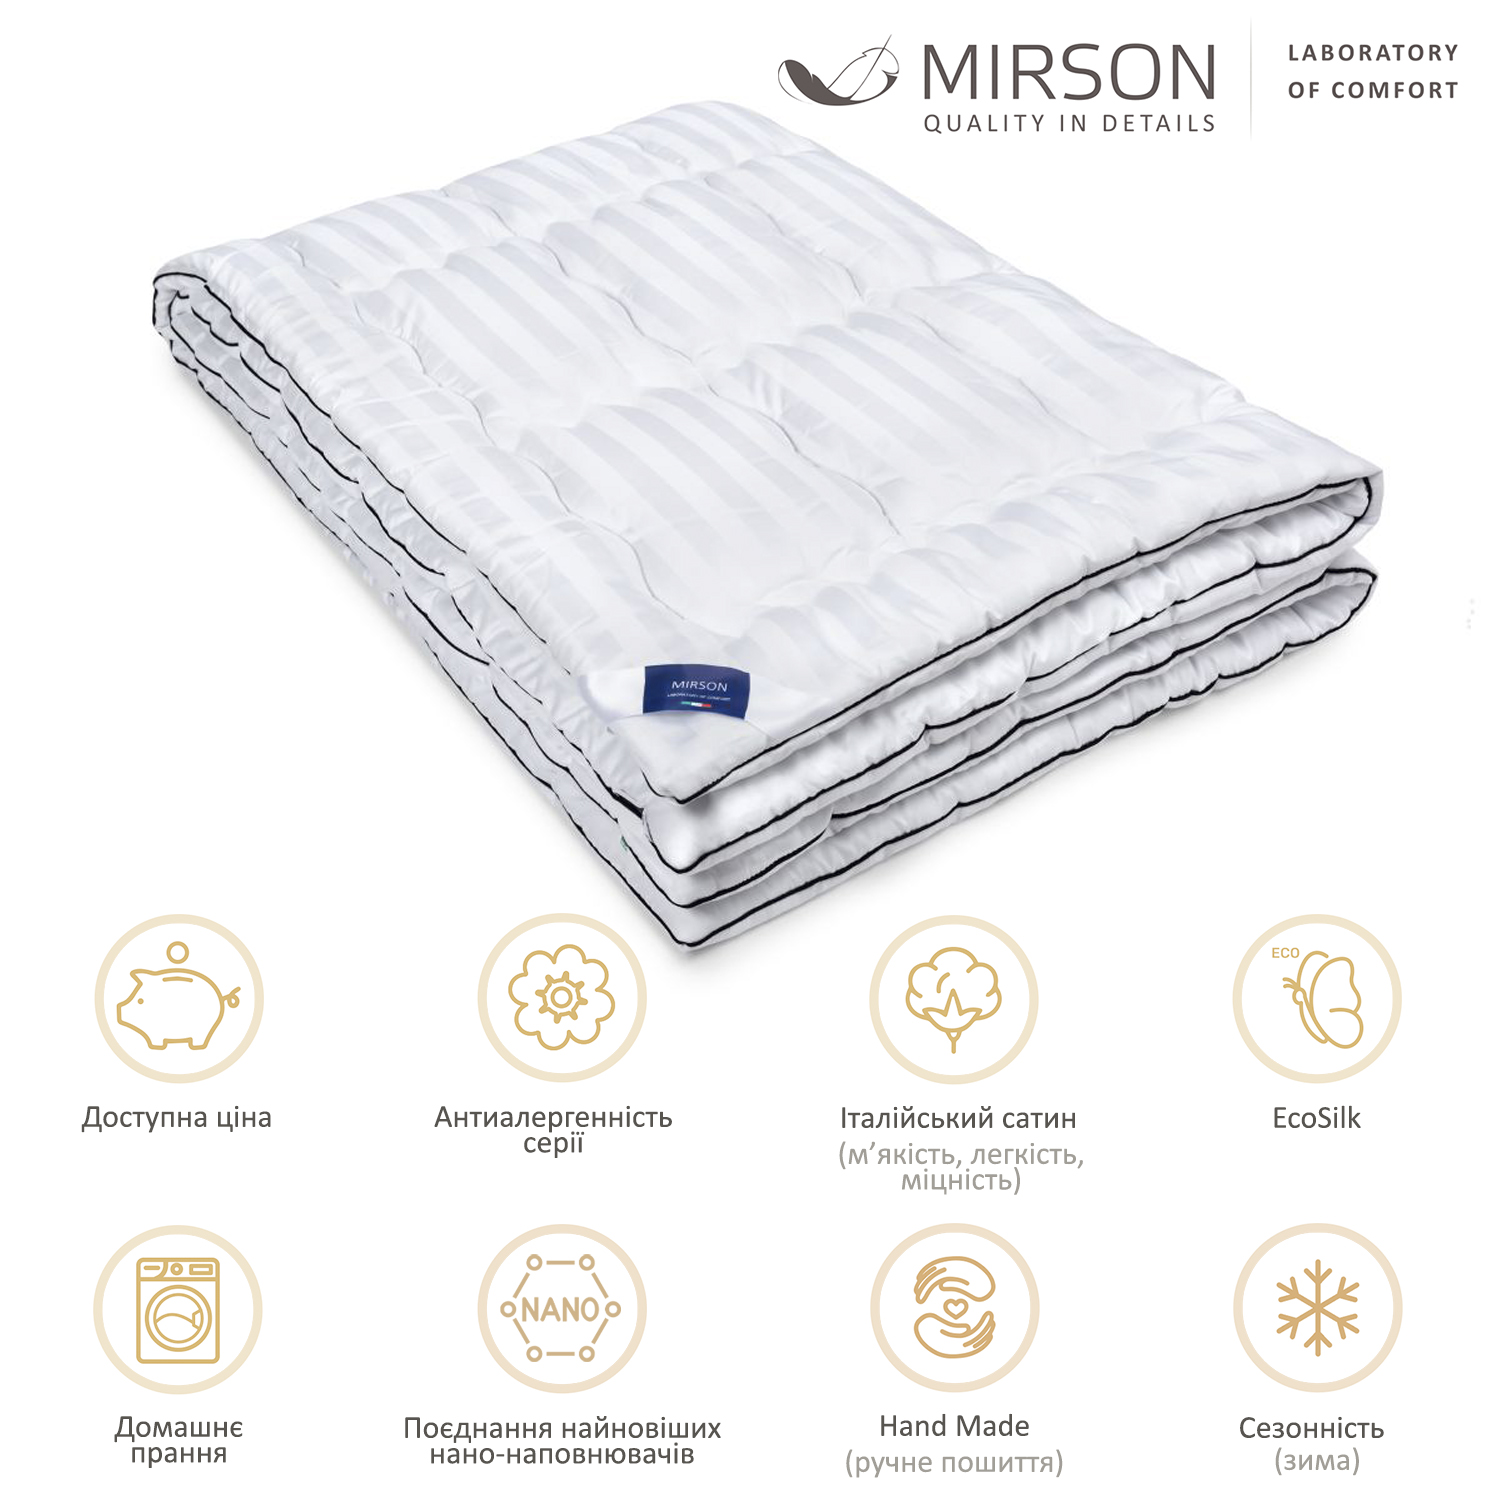 Одеяло антиаллергенное MirSon Premium Royal Pearl Hand Made №069, зимнее, 172x205 см, белое (58590070) - фото 5